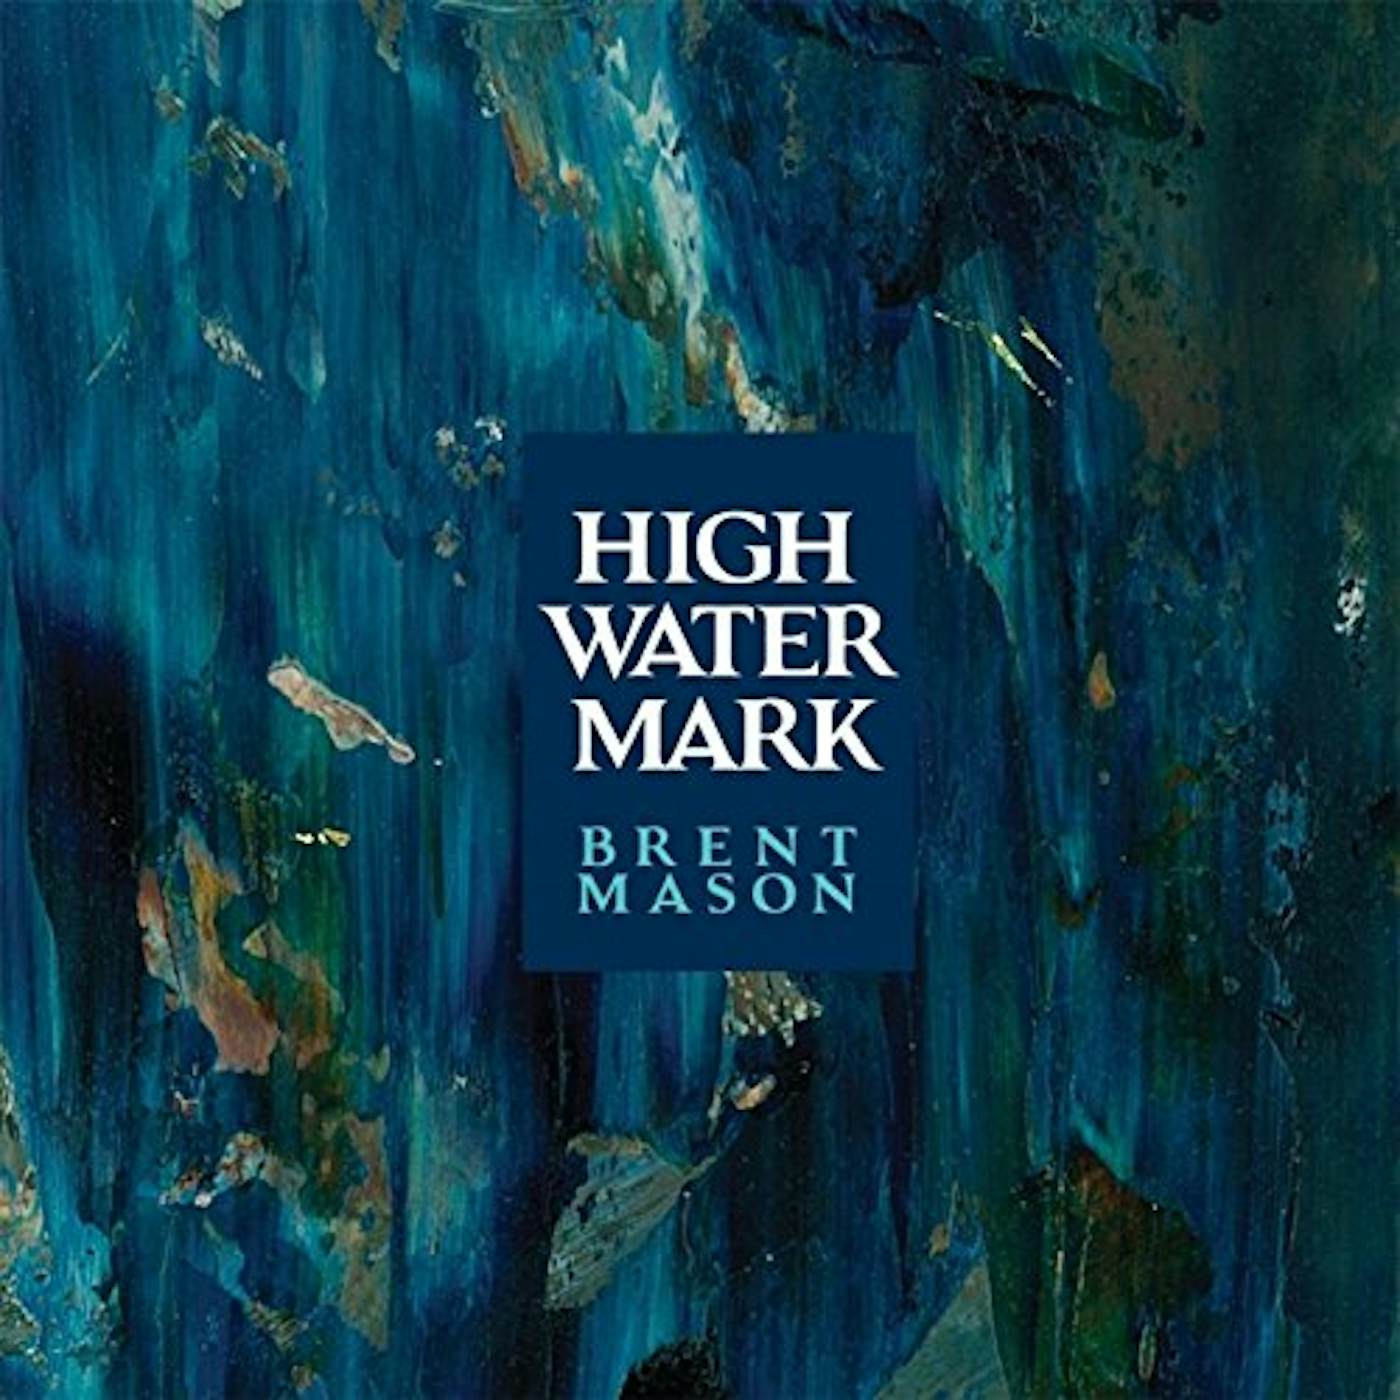 Brent Mason HIGH WATER MARK CD